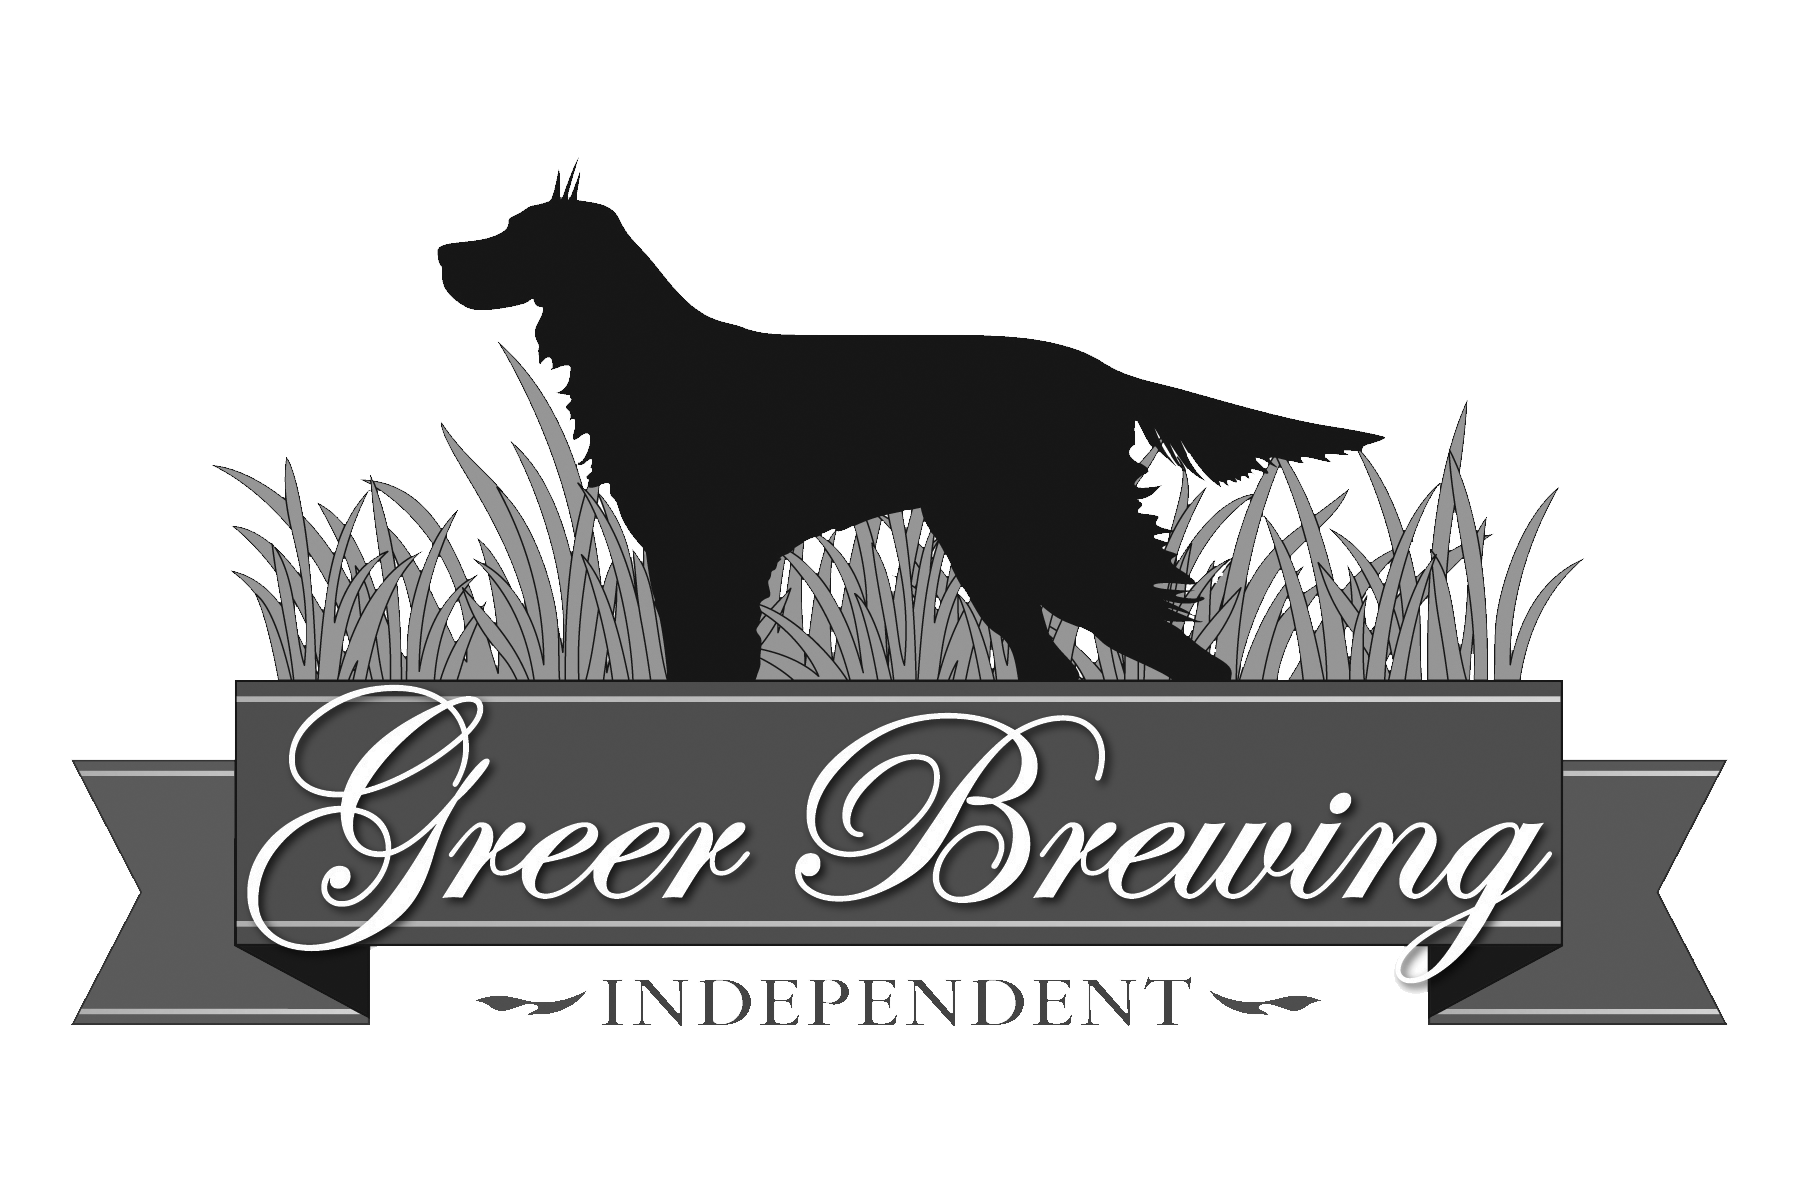 Greer Brewing Company